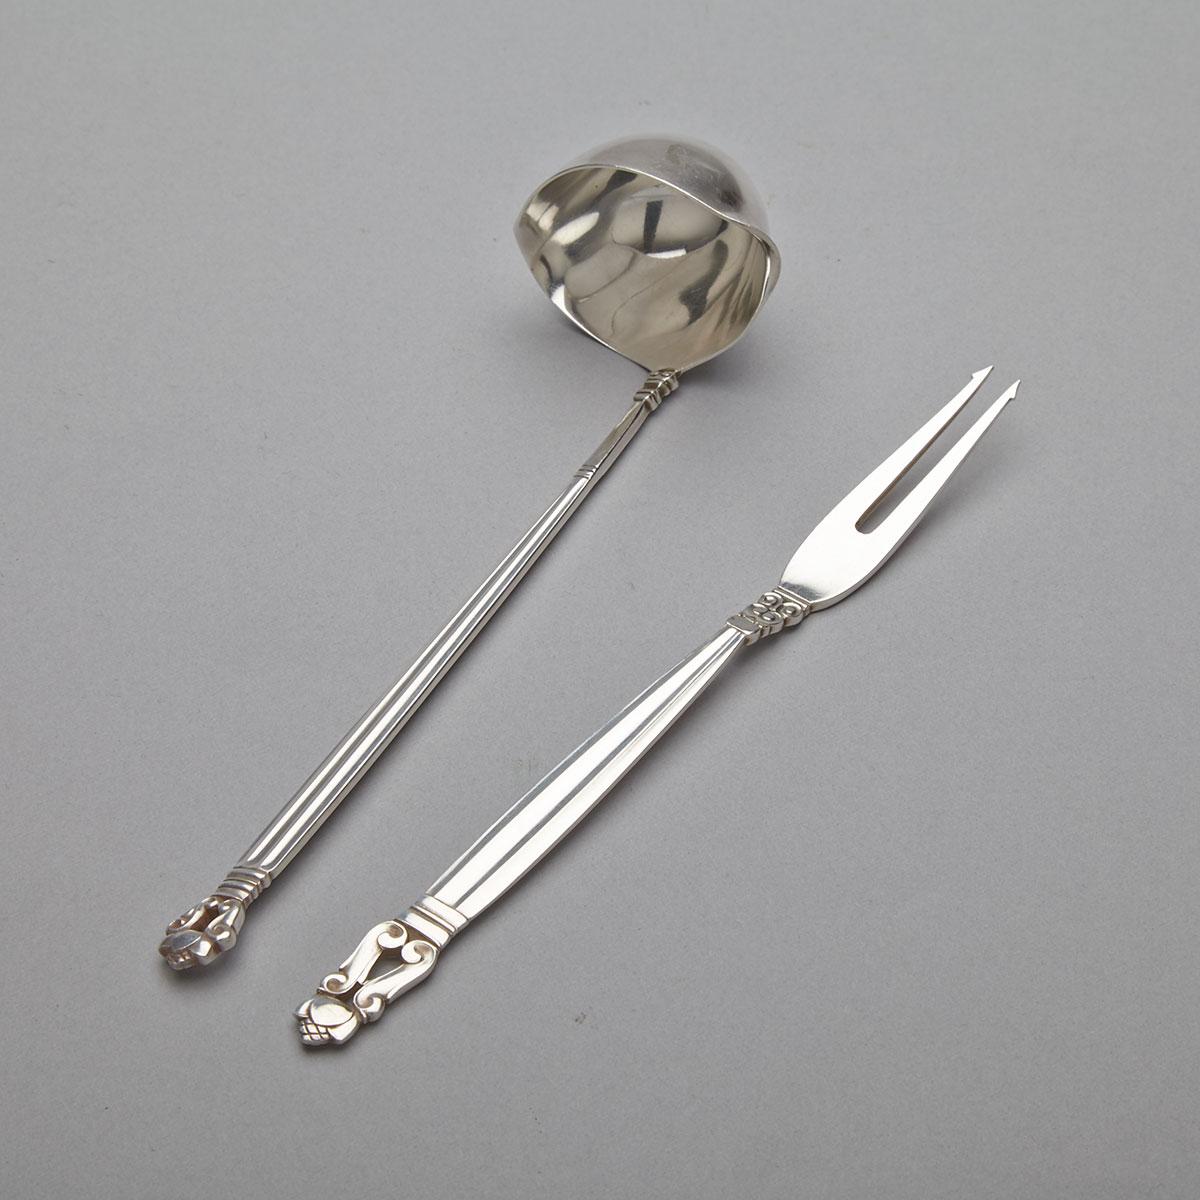 Danish Silver ‘Acorn’ Pattern Sauce Ladle and a Pickle Fork, Georg Jensen, Copenhagen, 20th century